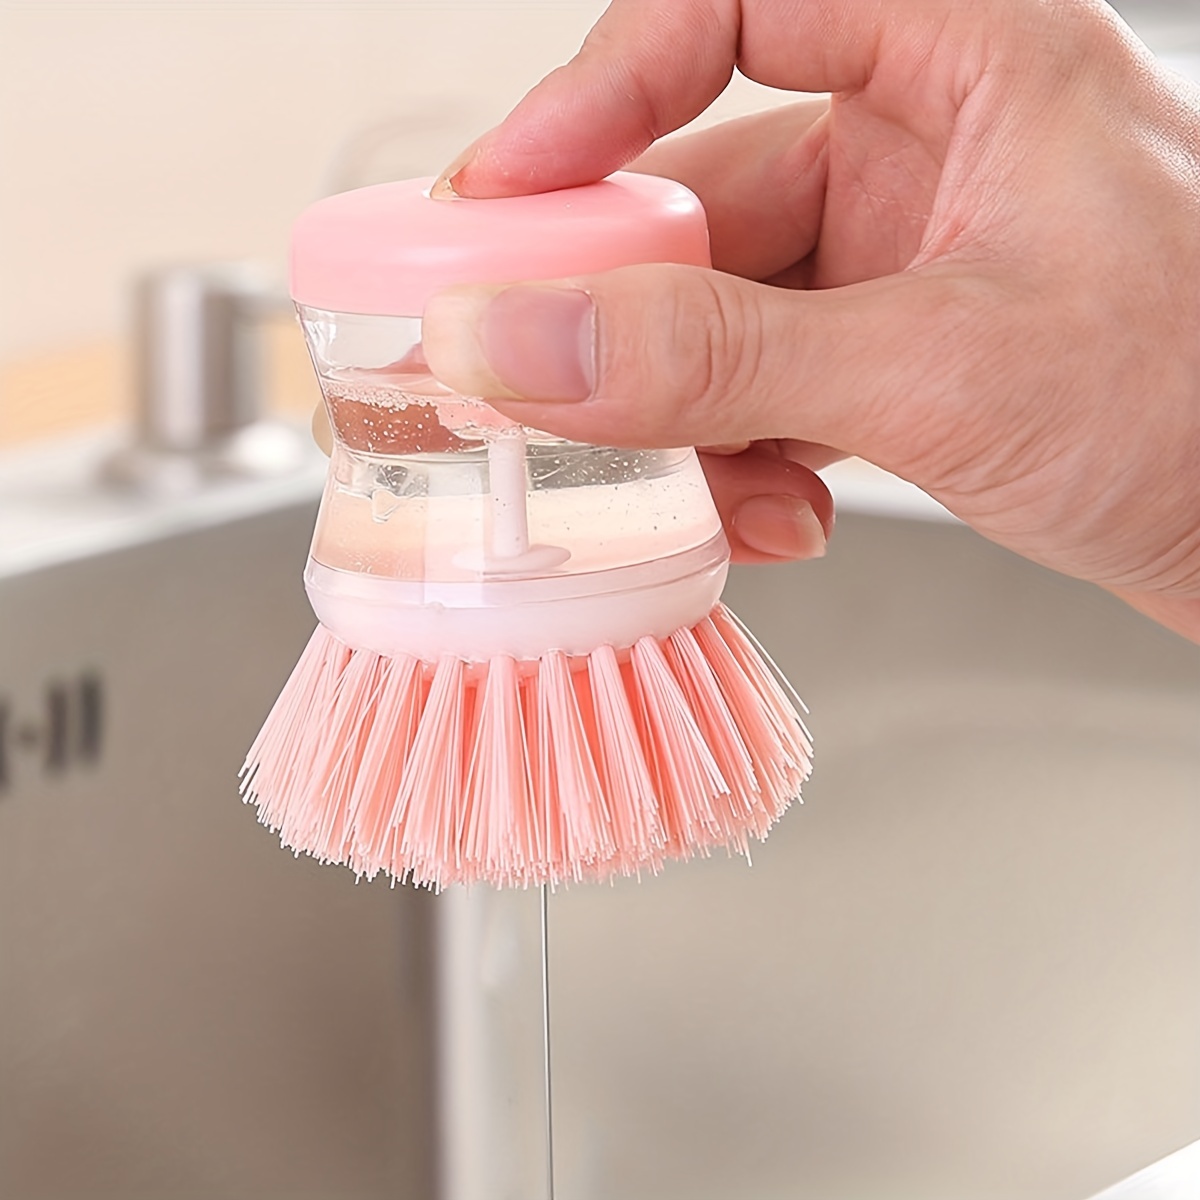 Ceramic Soap Dispenser Dish Brush: Perfect For Dishes, Pots, Pans